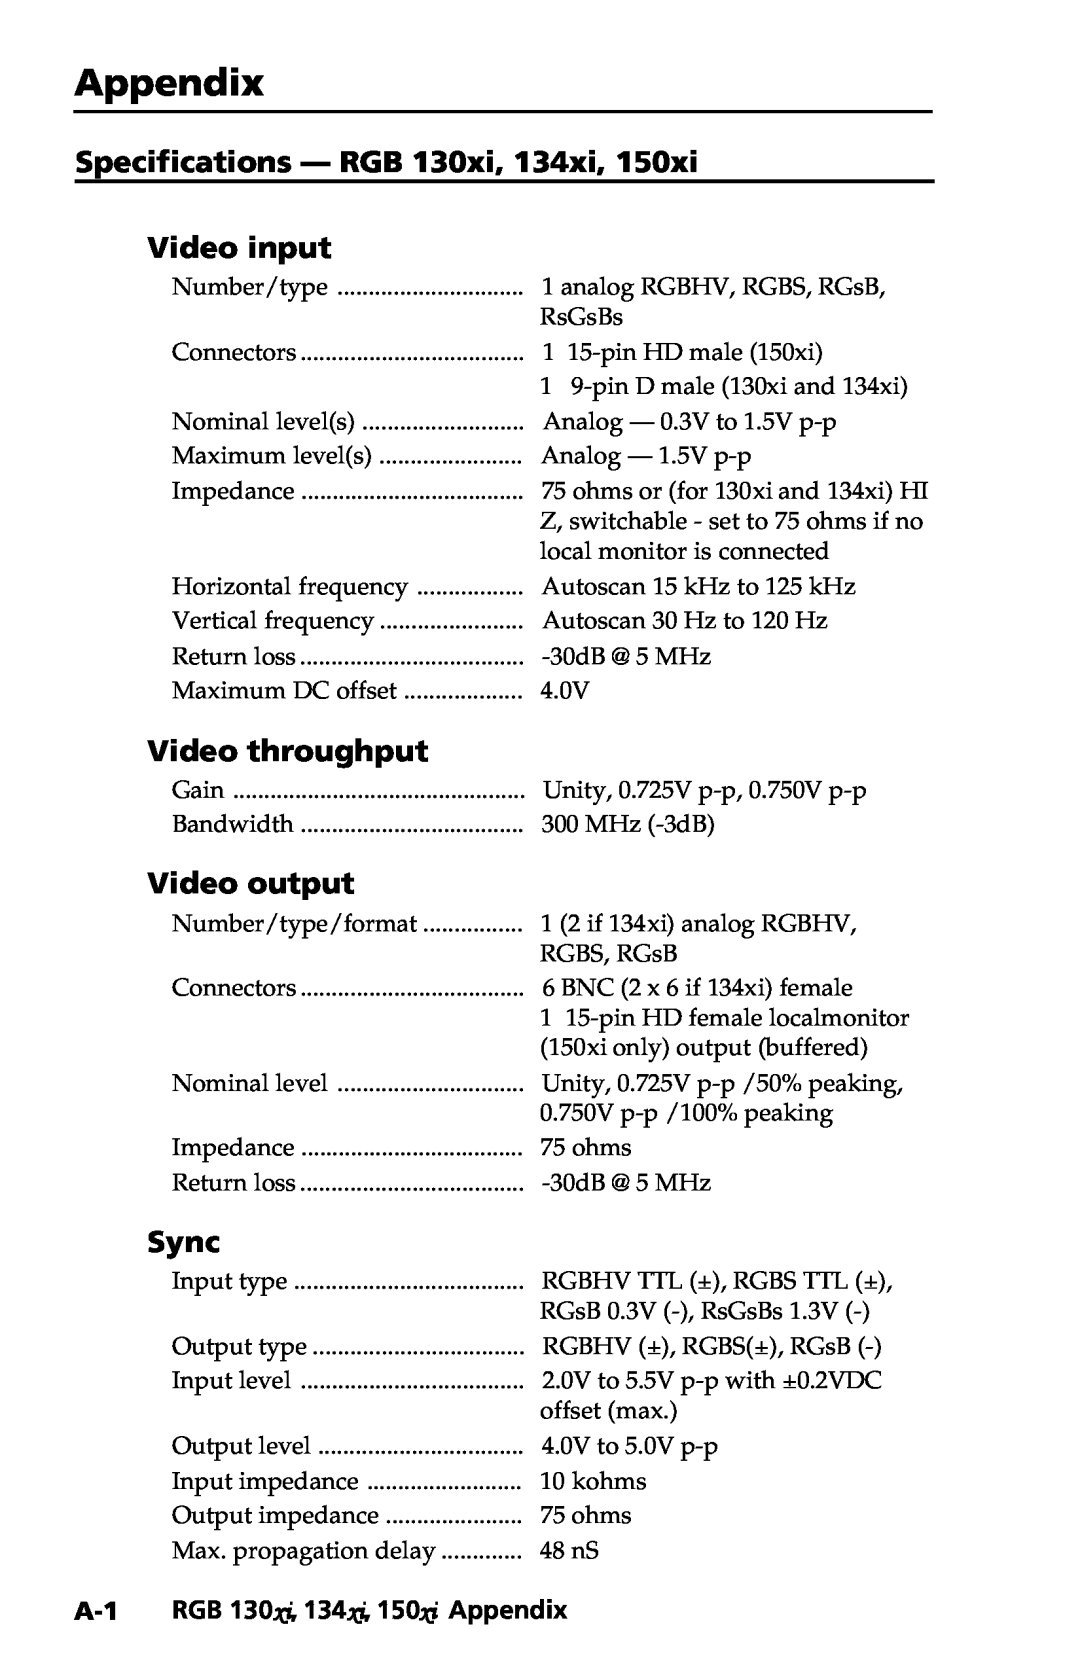 Extron electronic 150xi Appendix, Specifications - RGB 130xi, 134xi Video input, Video throughput, Video output, Sync 